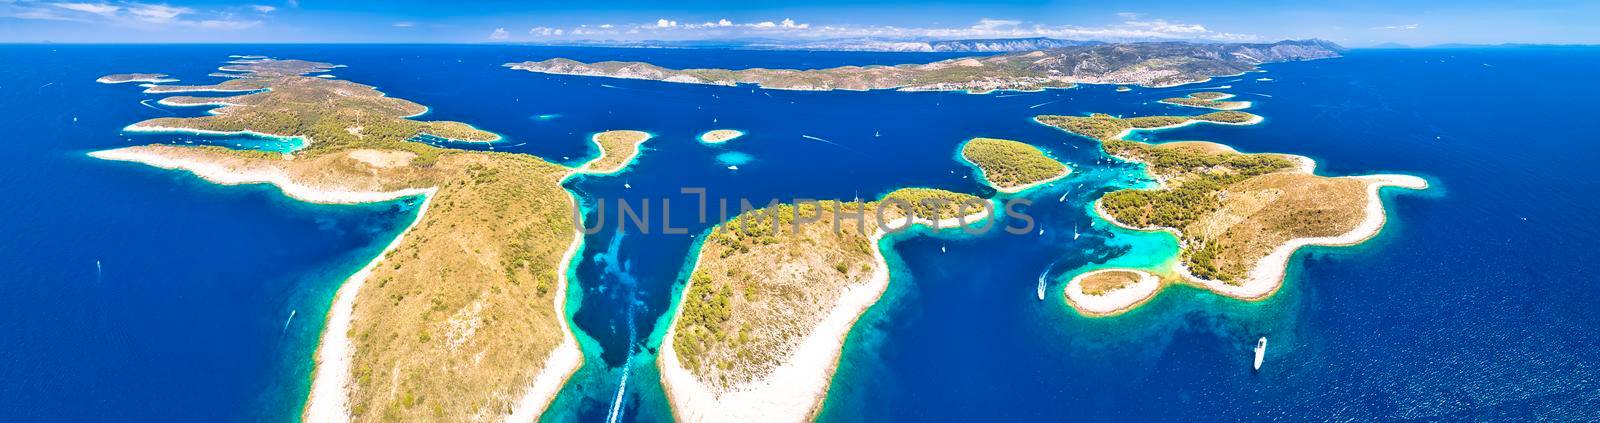 Archipelago of Croatia. Paklenski Otoci islands aerial view, tourist region of Dalmatia, Croatia